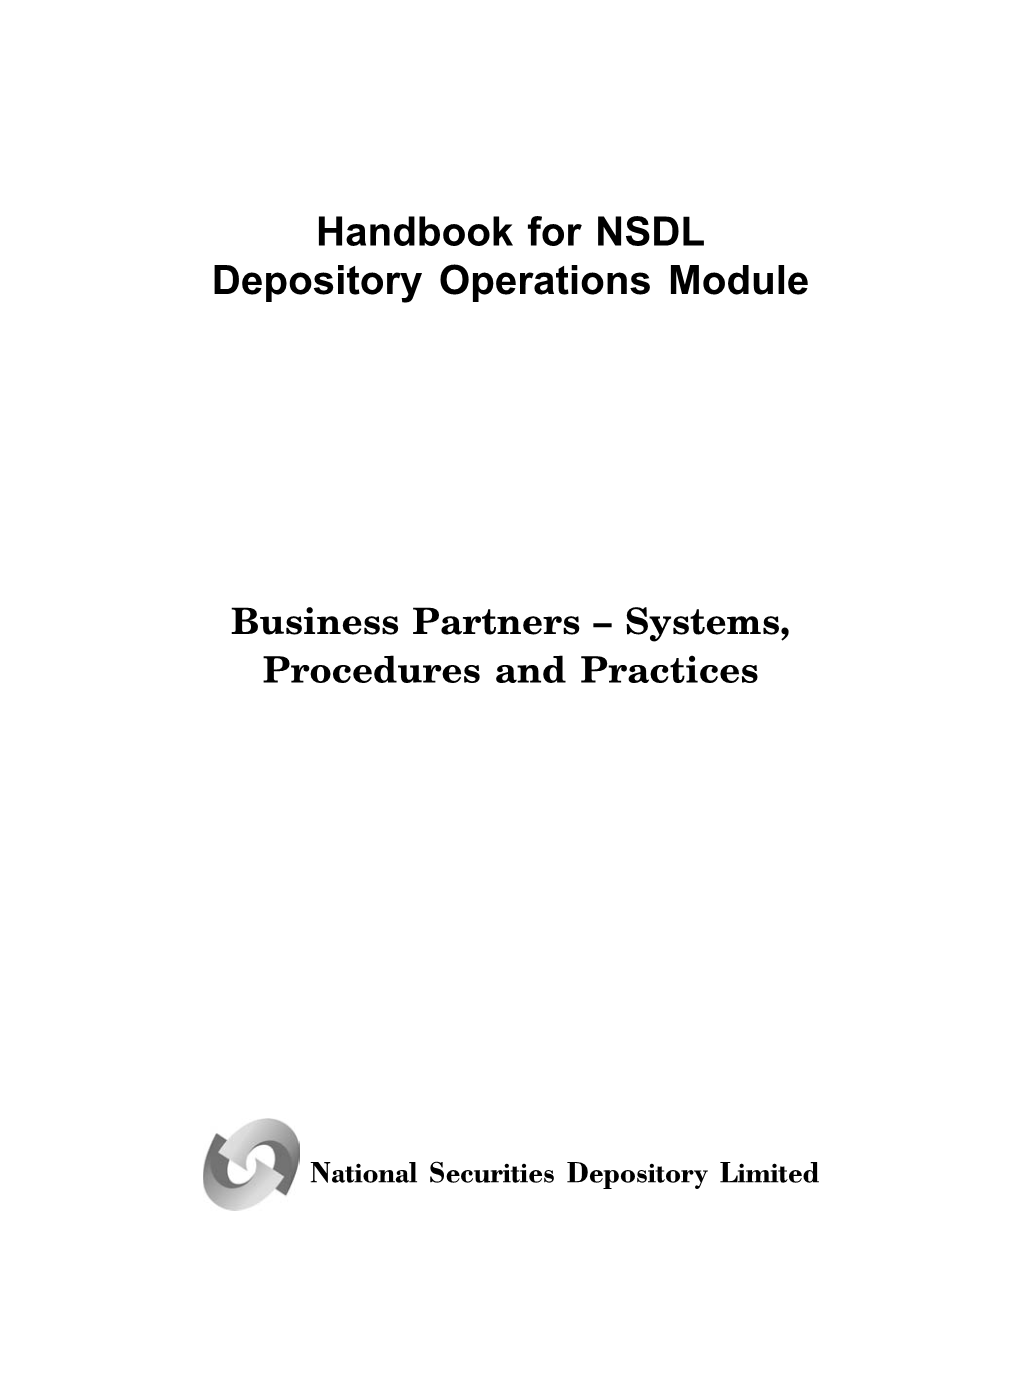 Handbook for NSDL Depository Operations Module